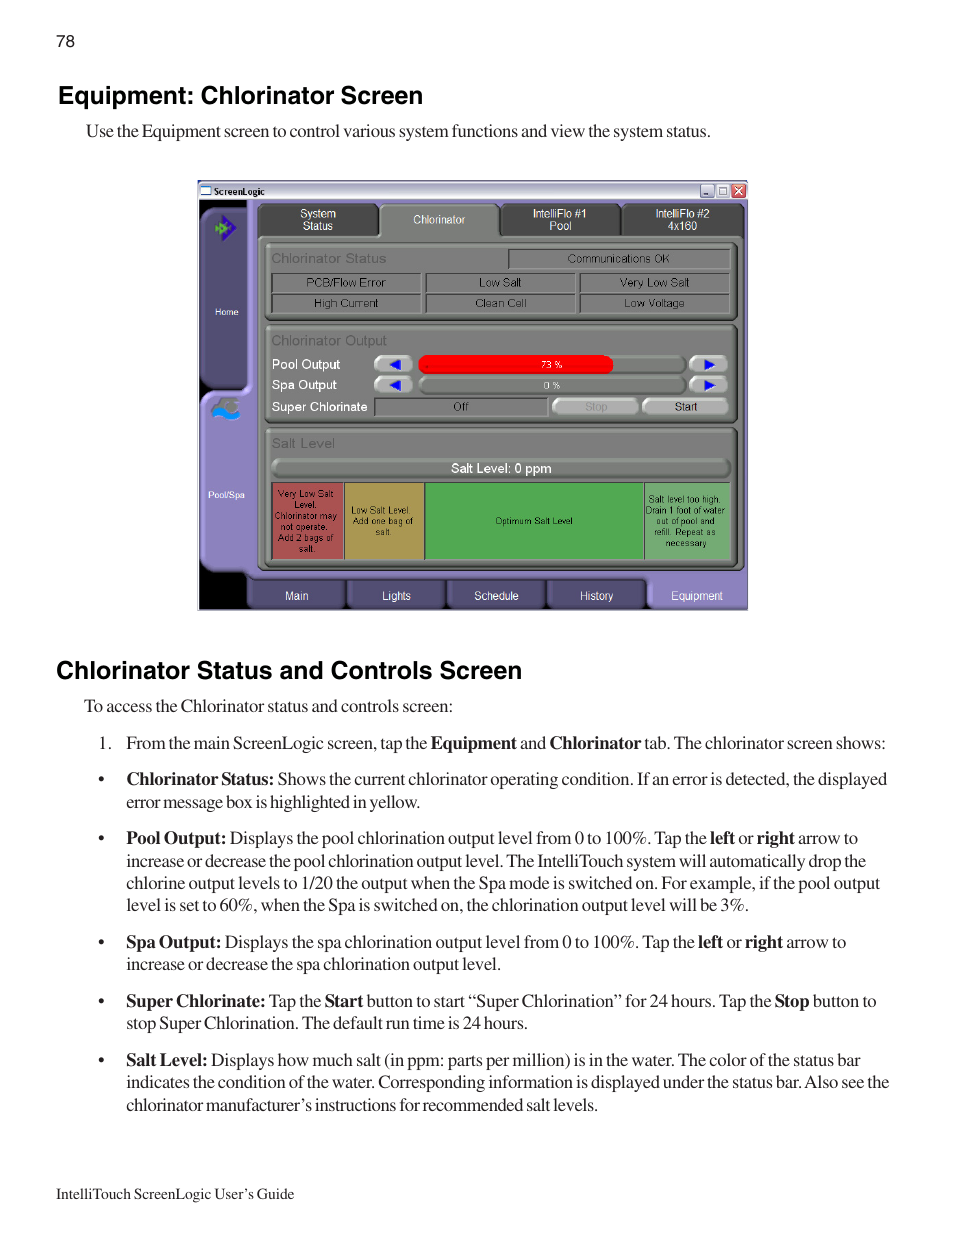 Equipment: chlorinator screen, Chlorinator status and controls screen